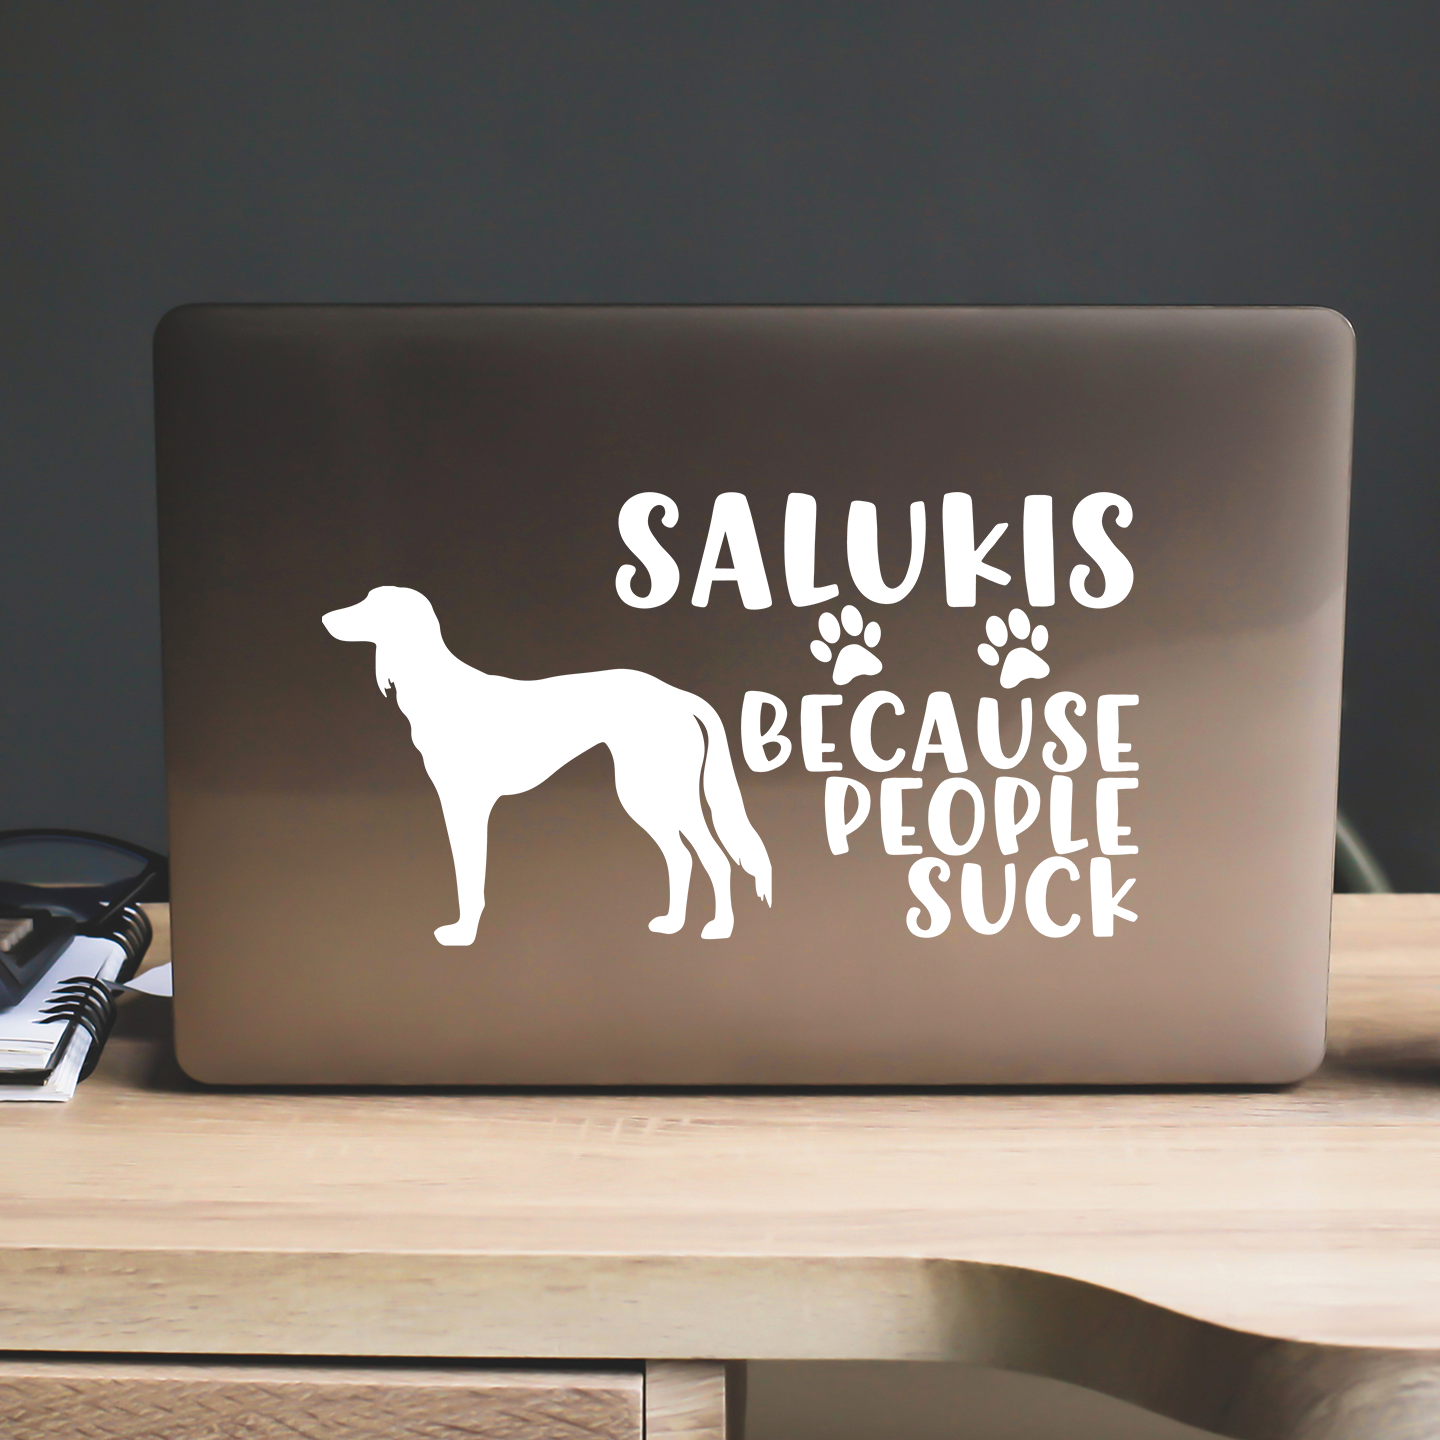 Salukis Because People Suck Sticker